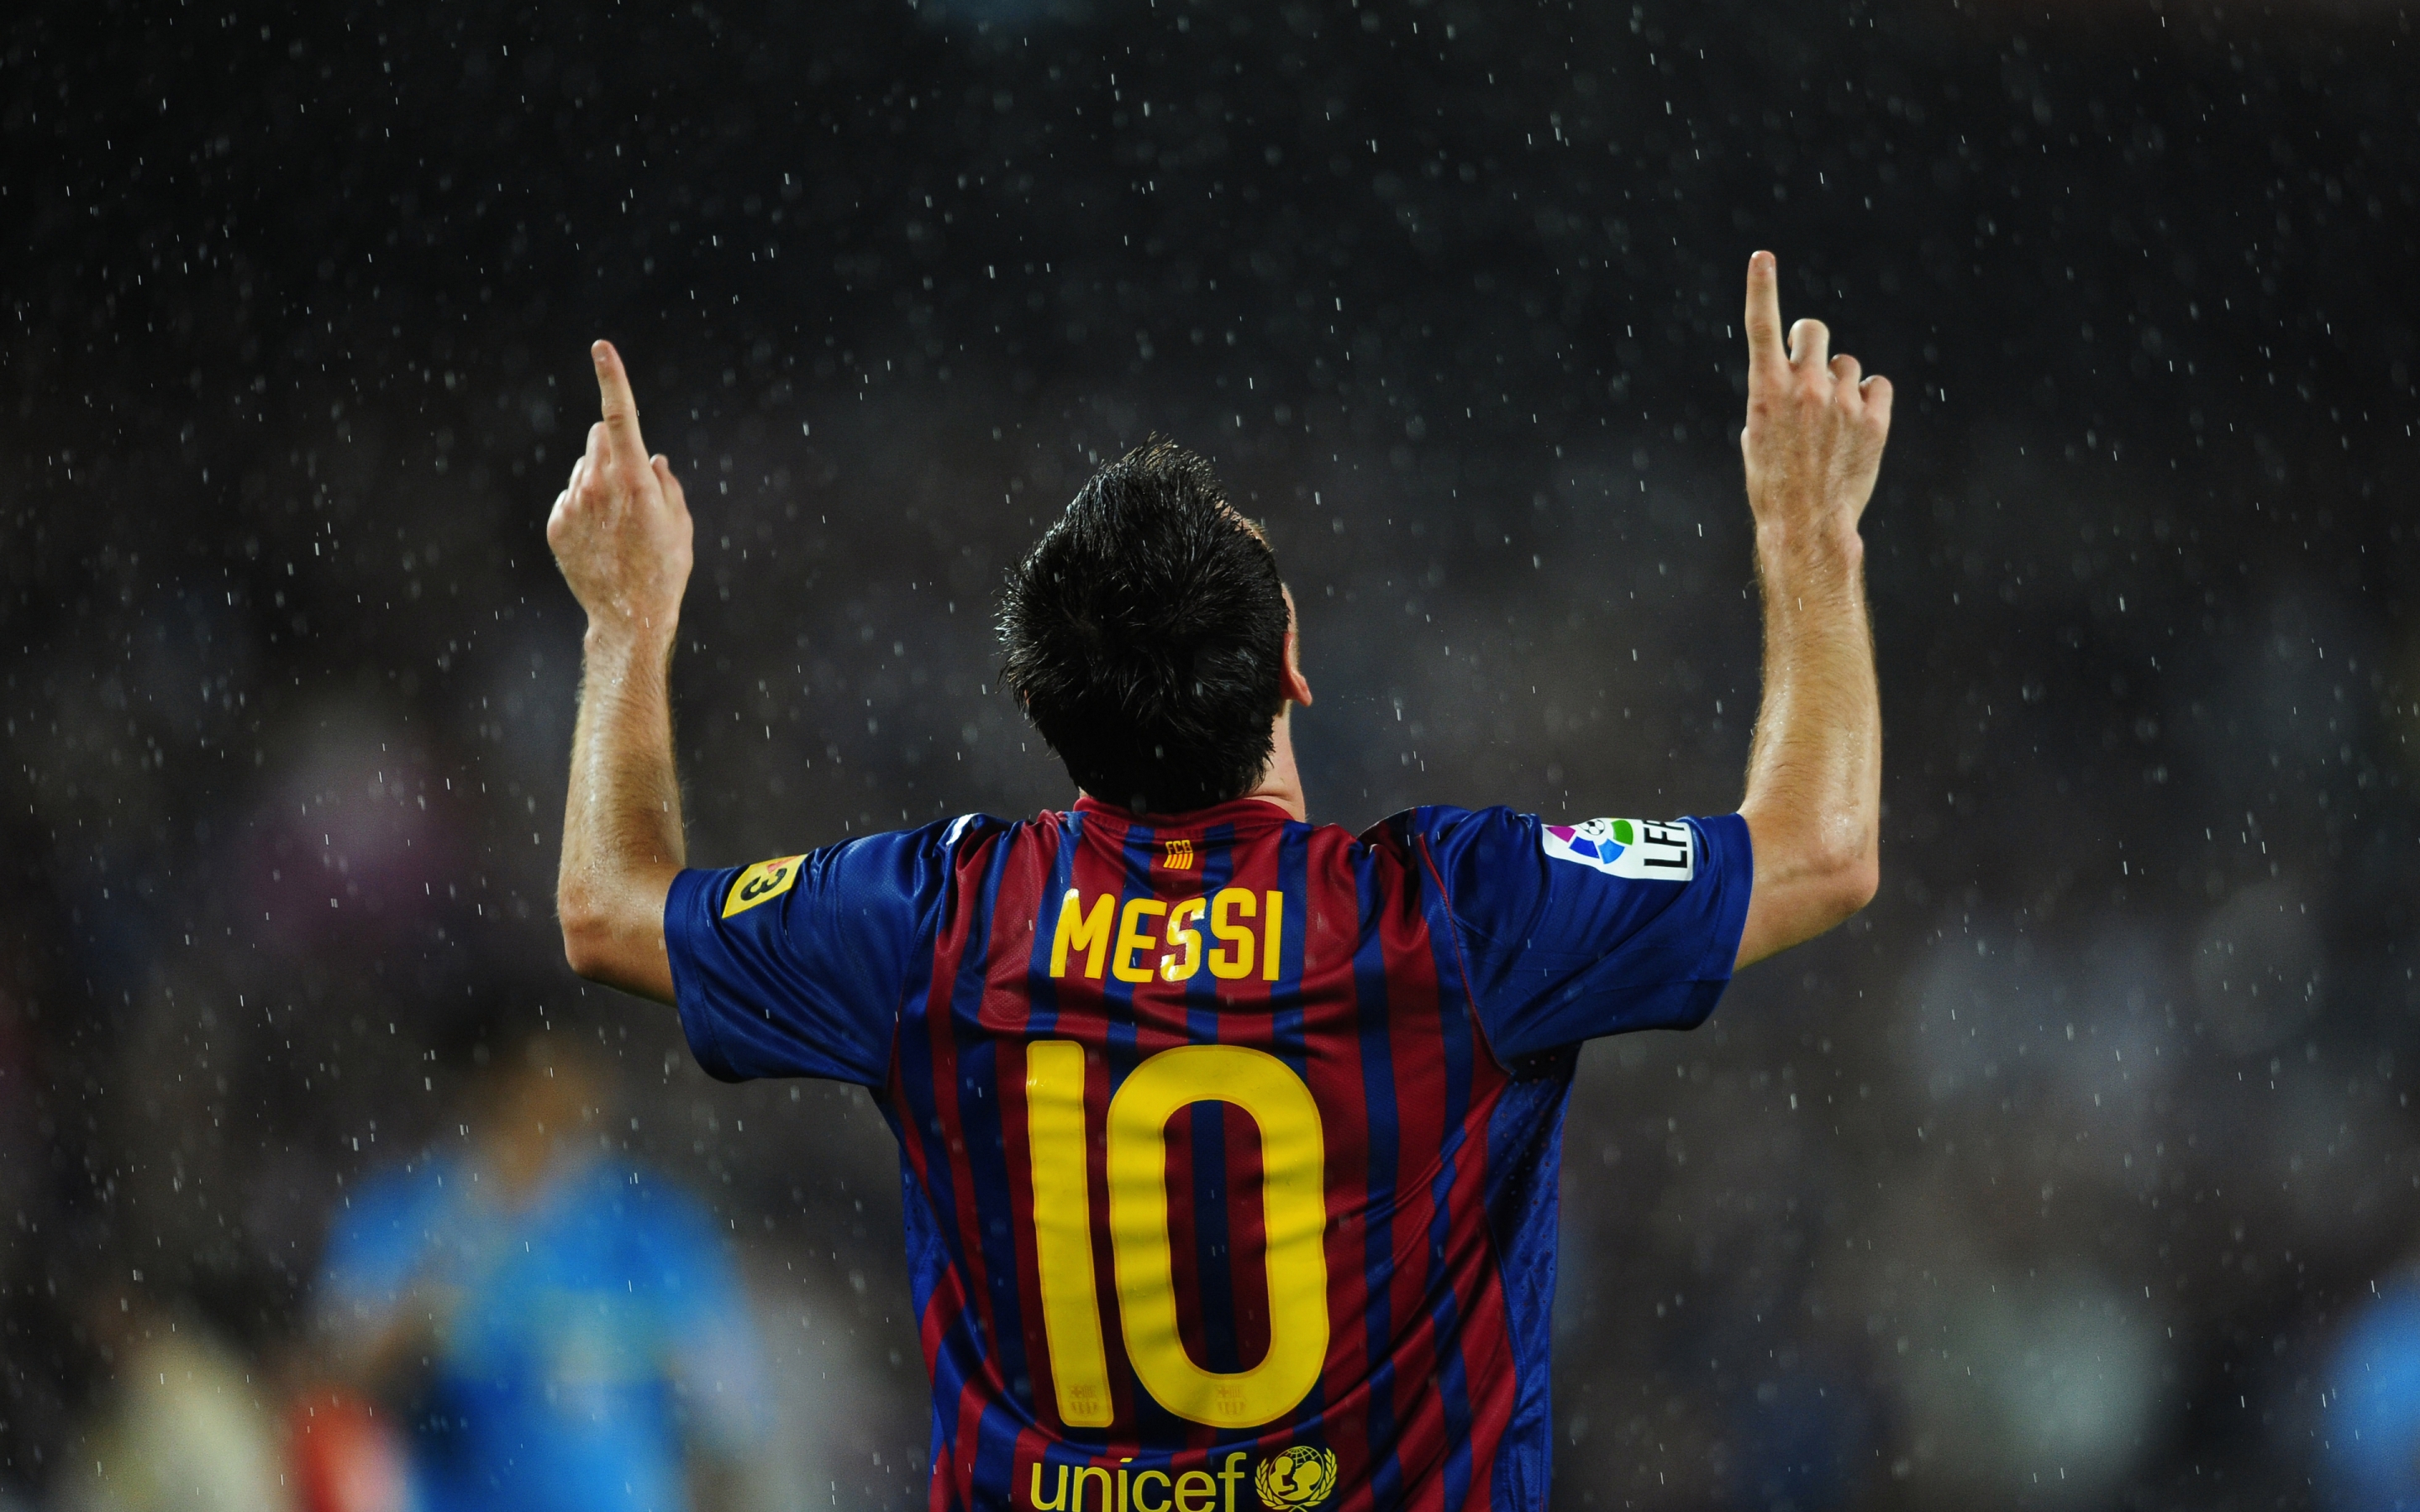 Lionel Messi in Rain for 2880 x 1800 Retina Display resolution